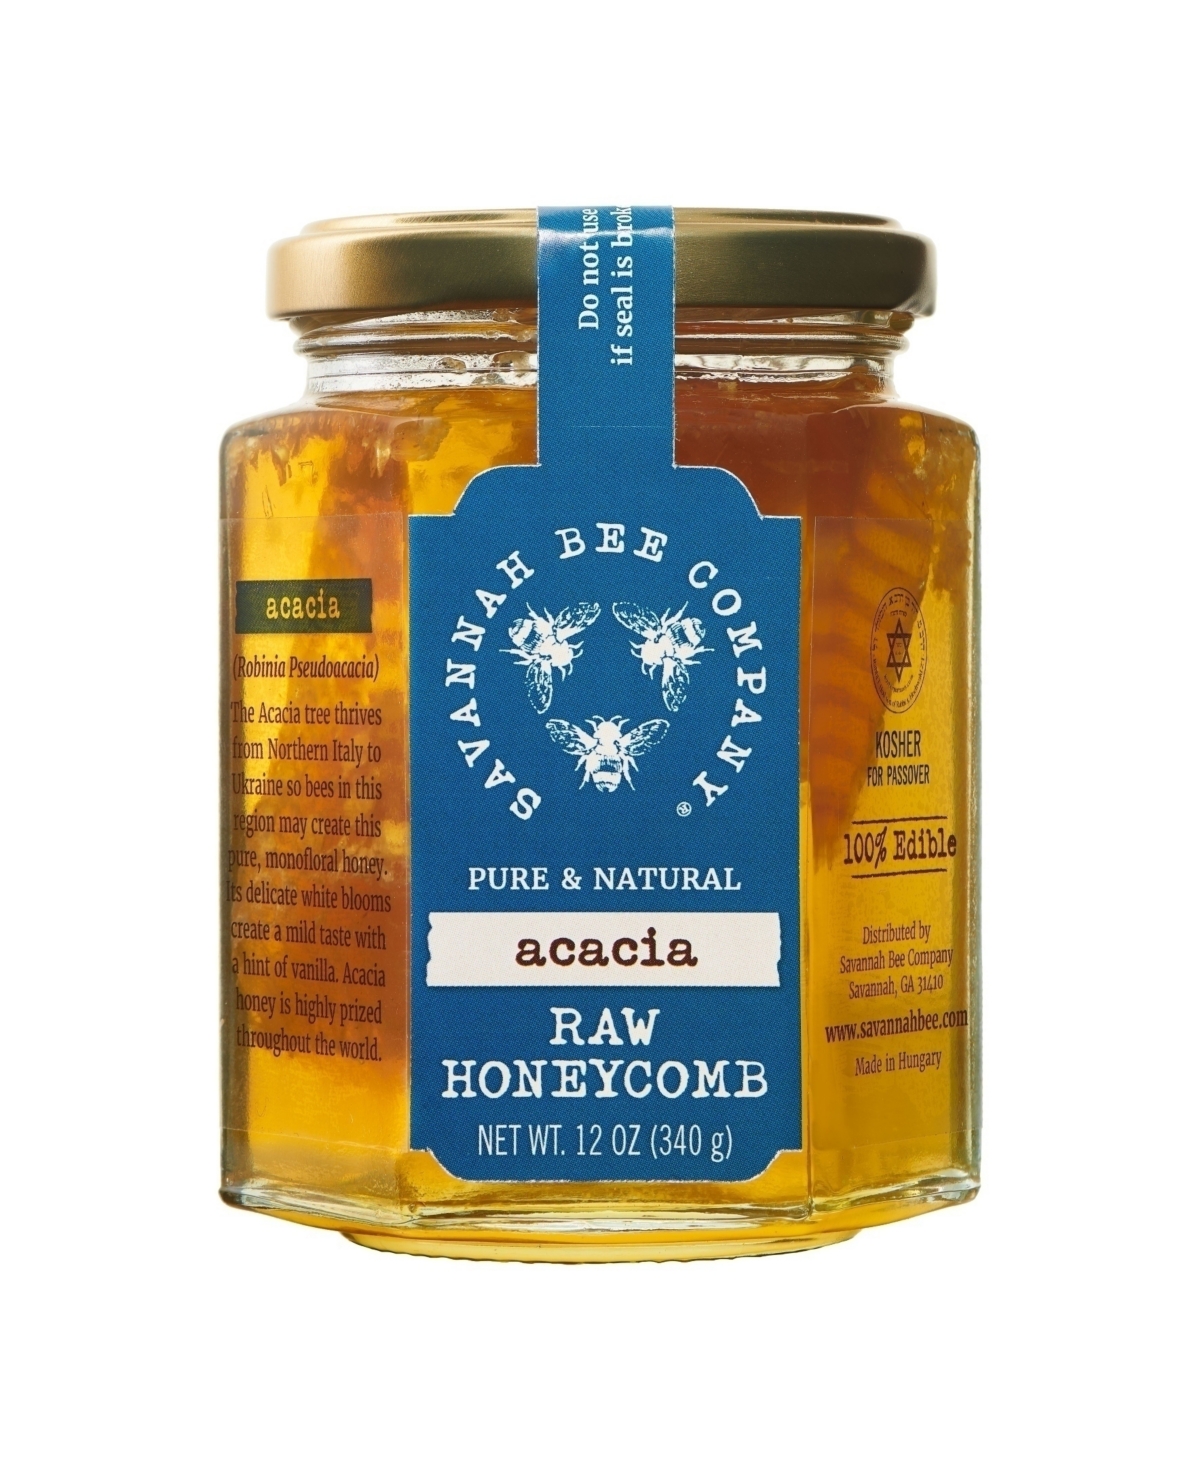 Savannah Bee Company Acacia Raw Honeycomb Jar